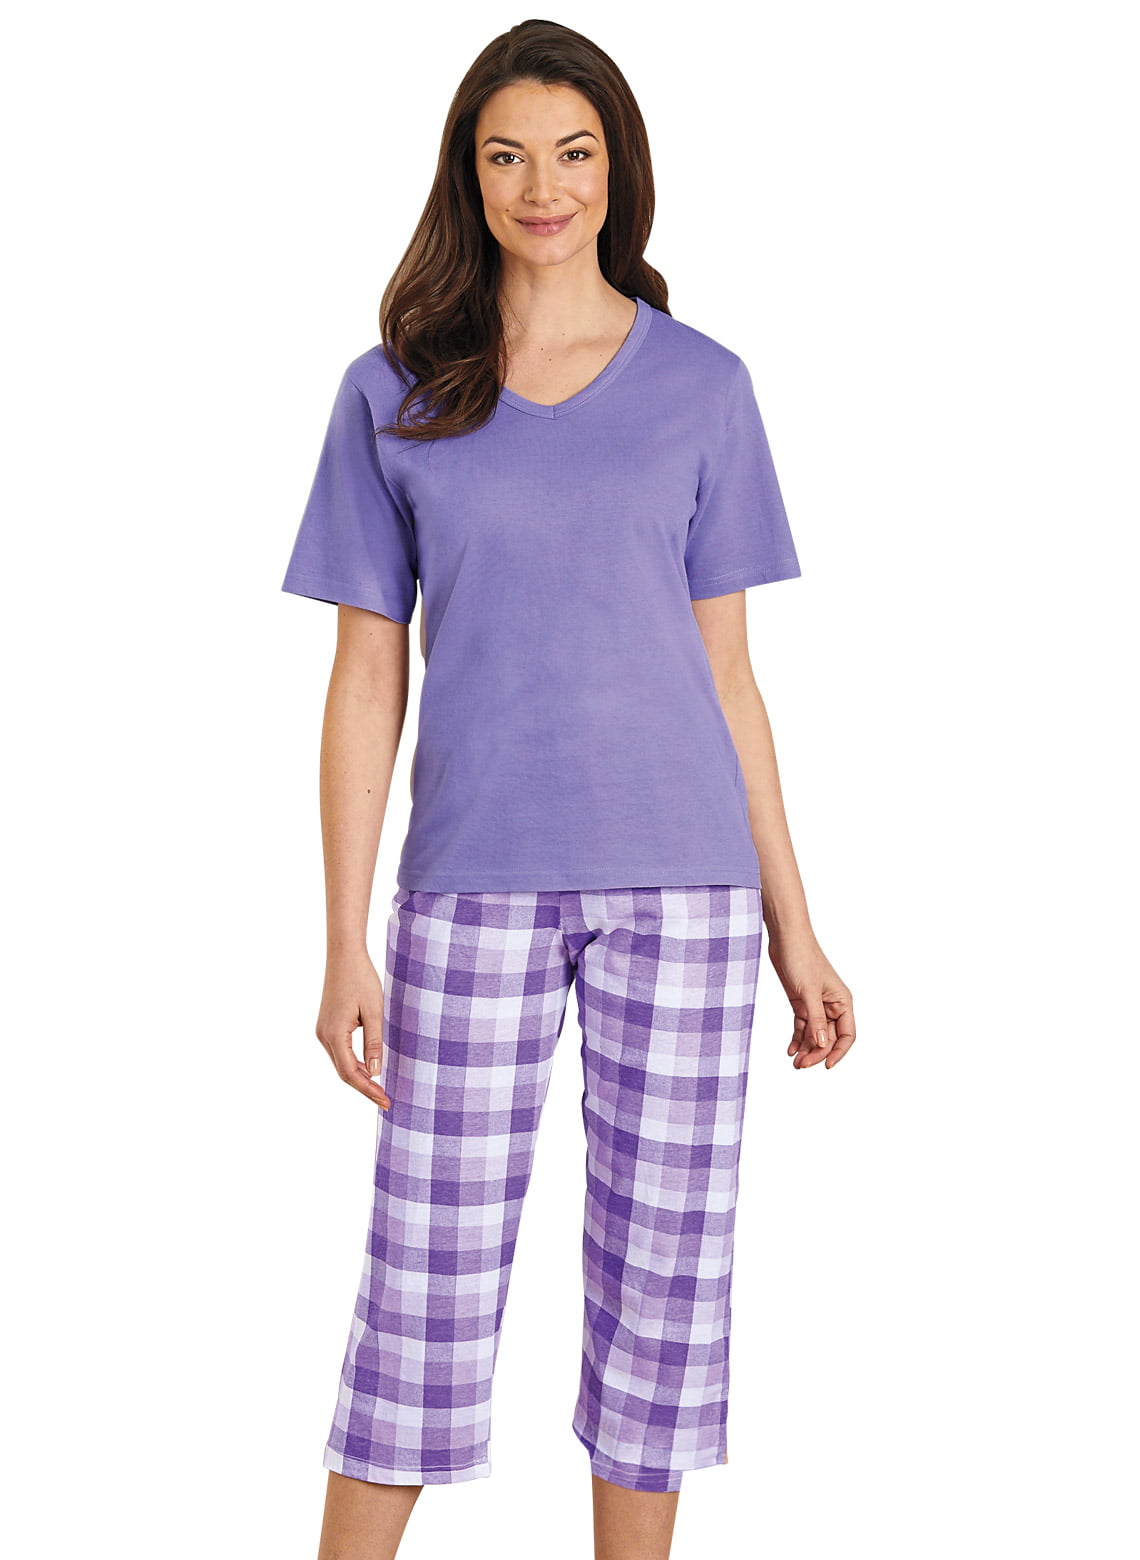 Women’s Pajama Set Sleepwear Tops with Capri Pants Casual and Fun Prints Pajama Sets